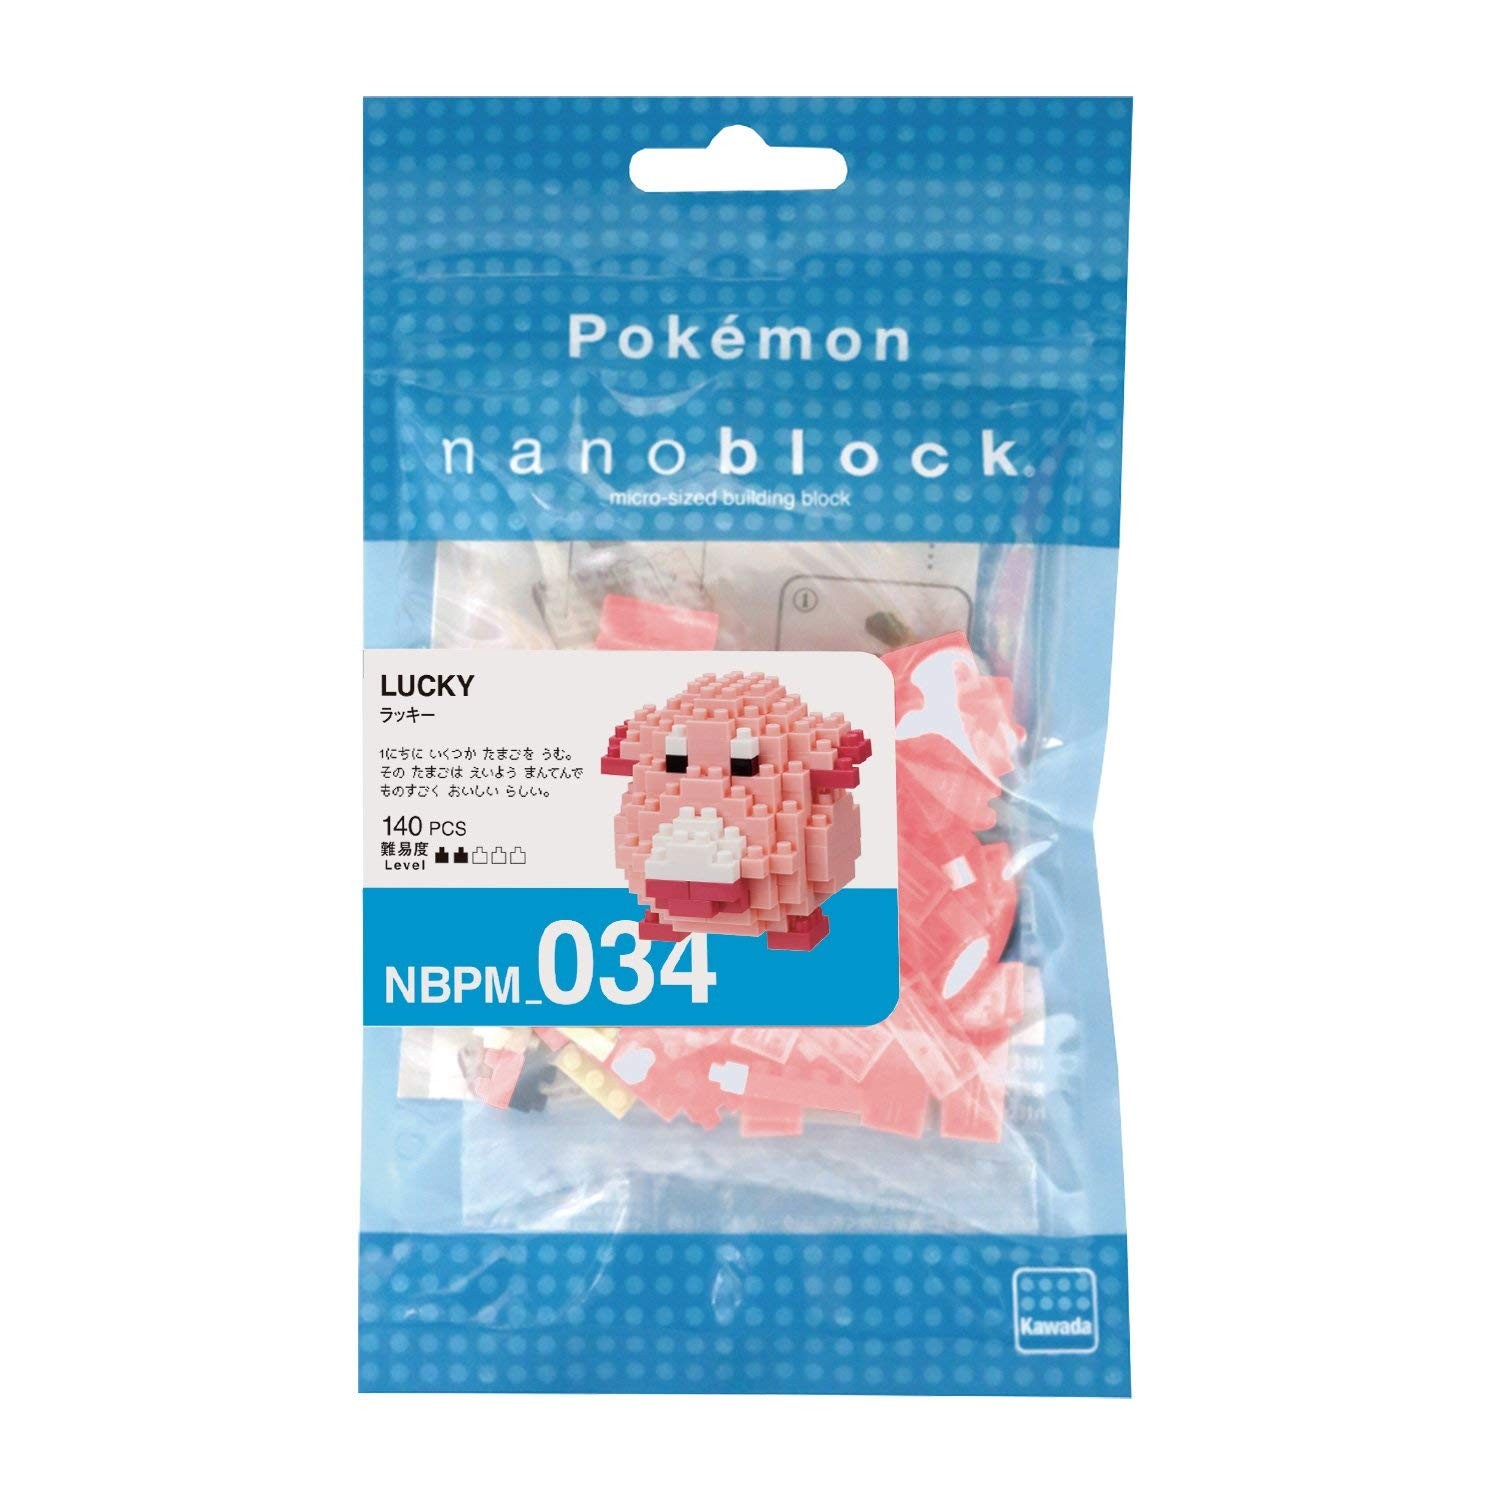 Kawada Nanoblock NBPM 034 Pokemon Lucky Chansey Japan IMPORT for sale online 